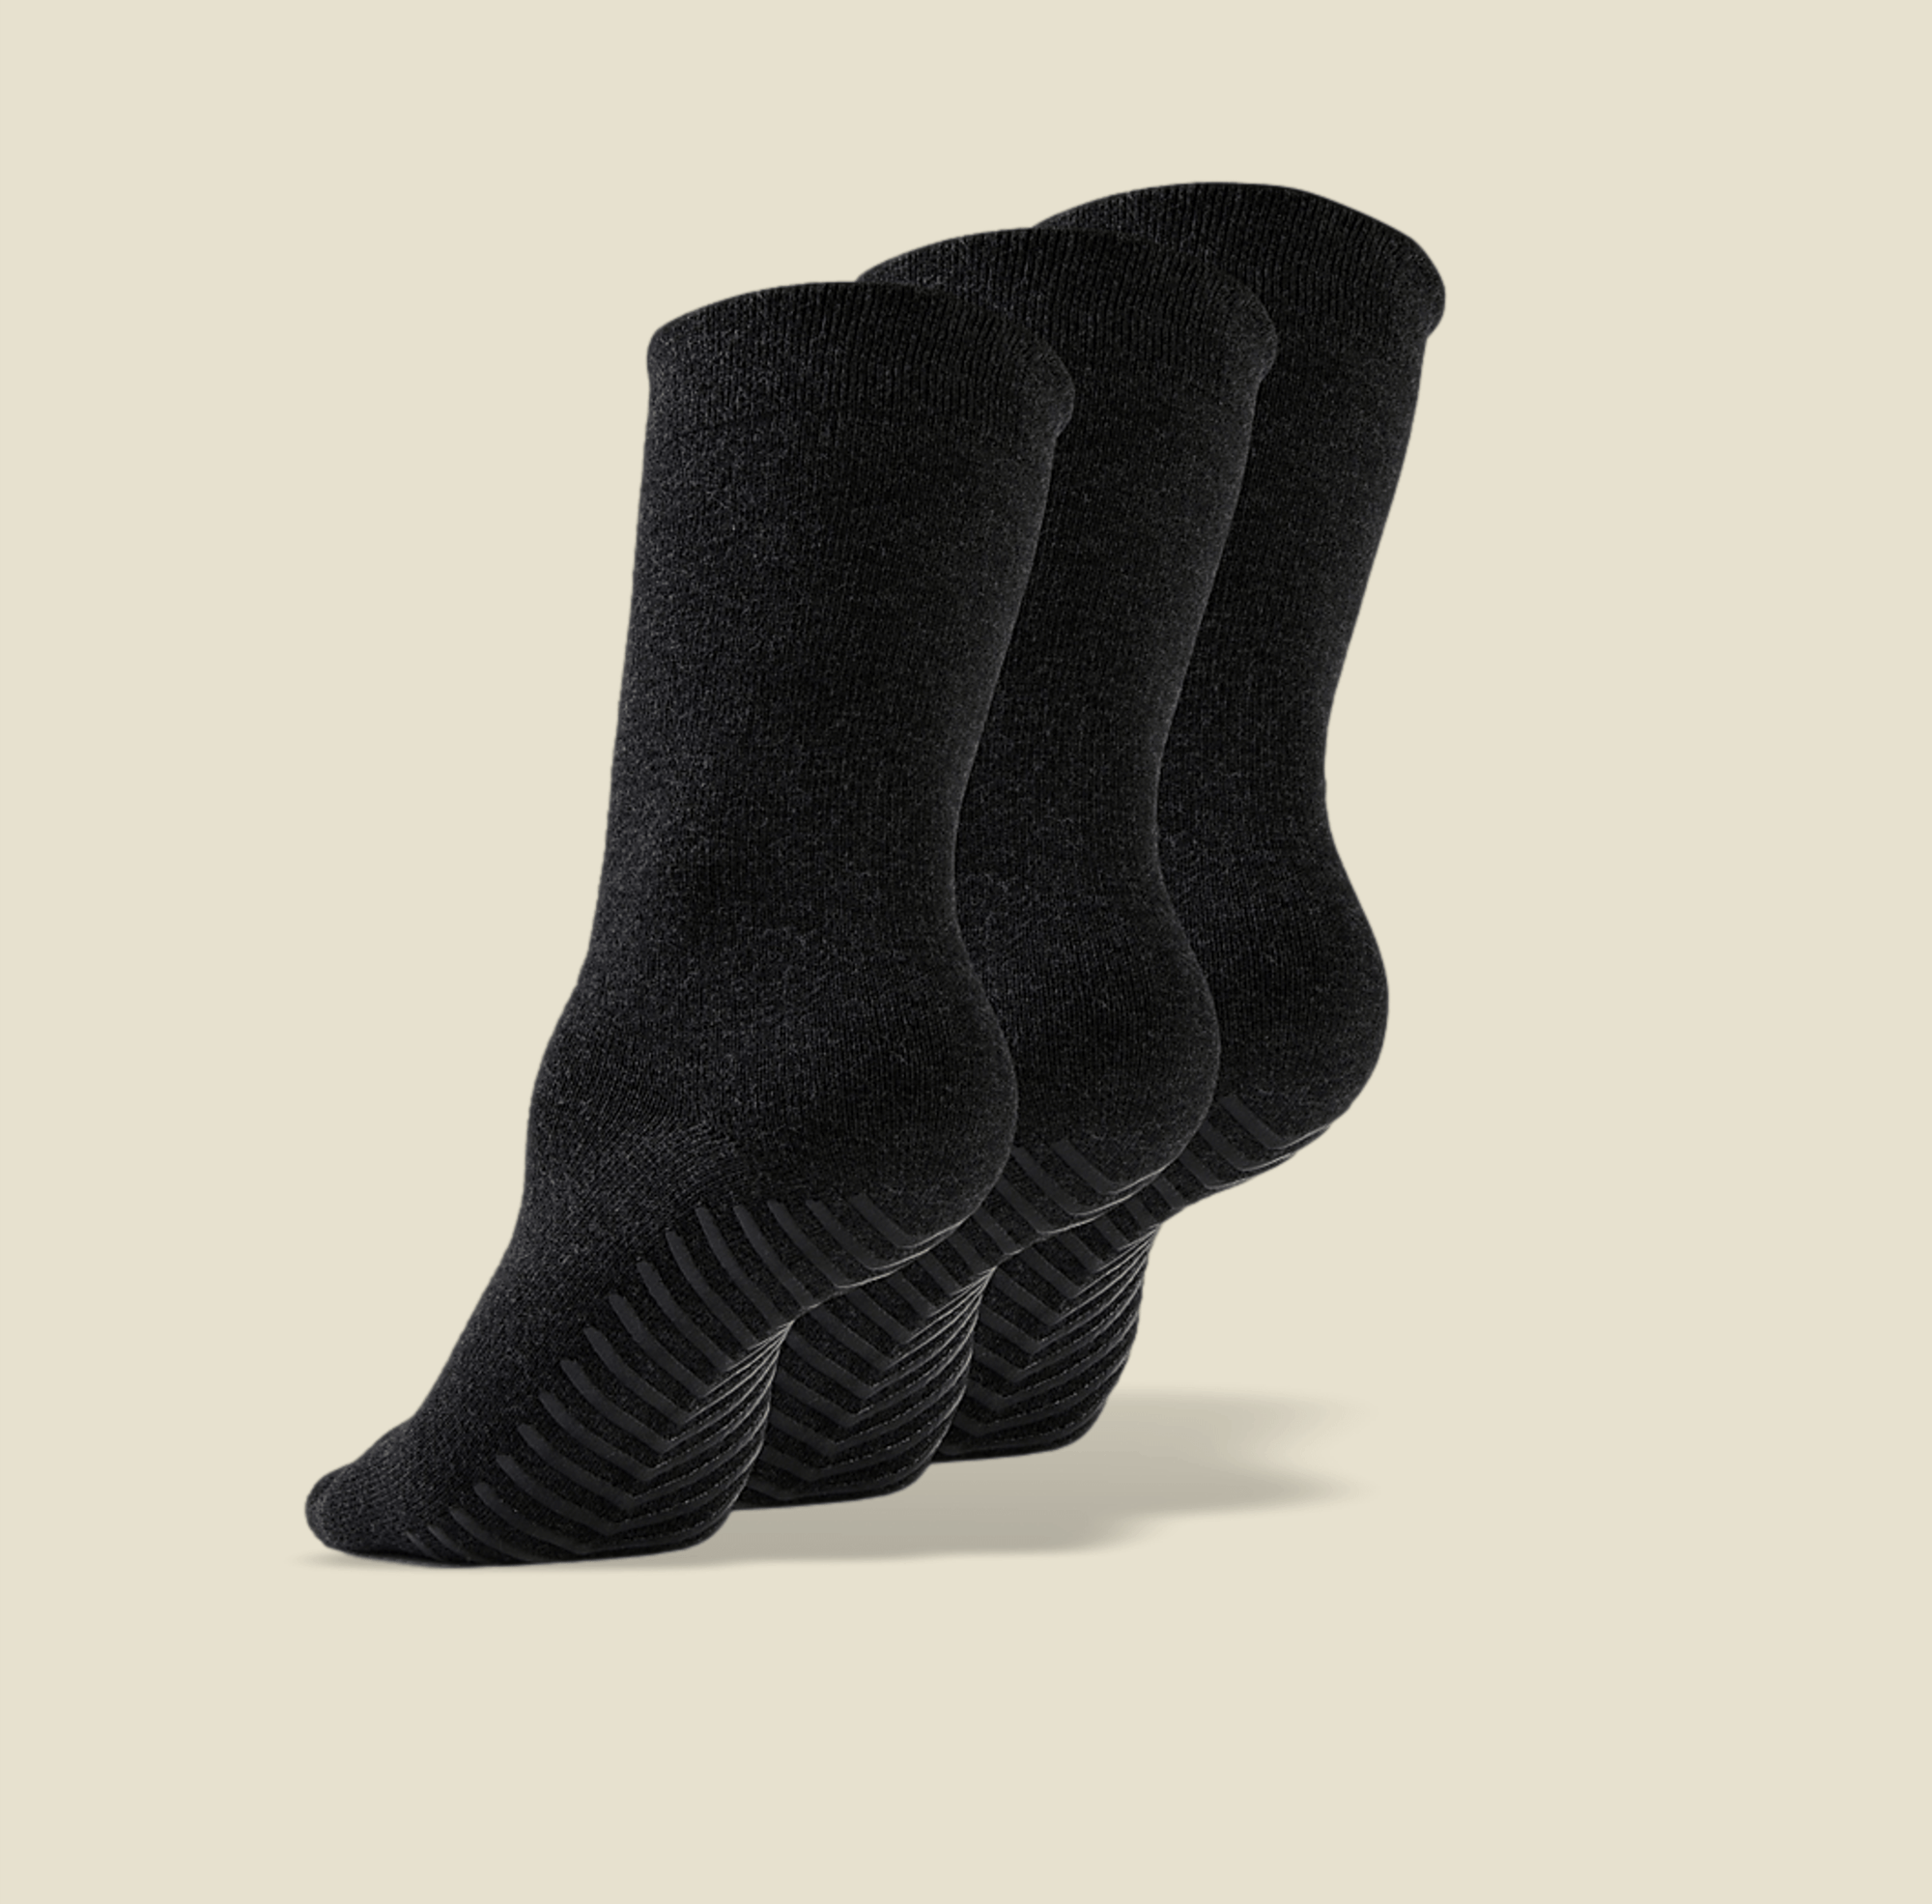 Women's Black Original Crew Non-Slip Socks - 3 pairs - Gripjoy Socks